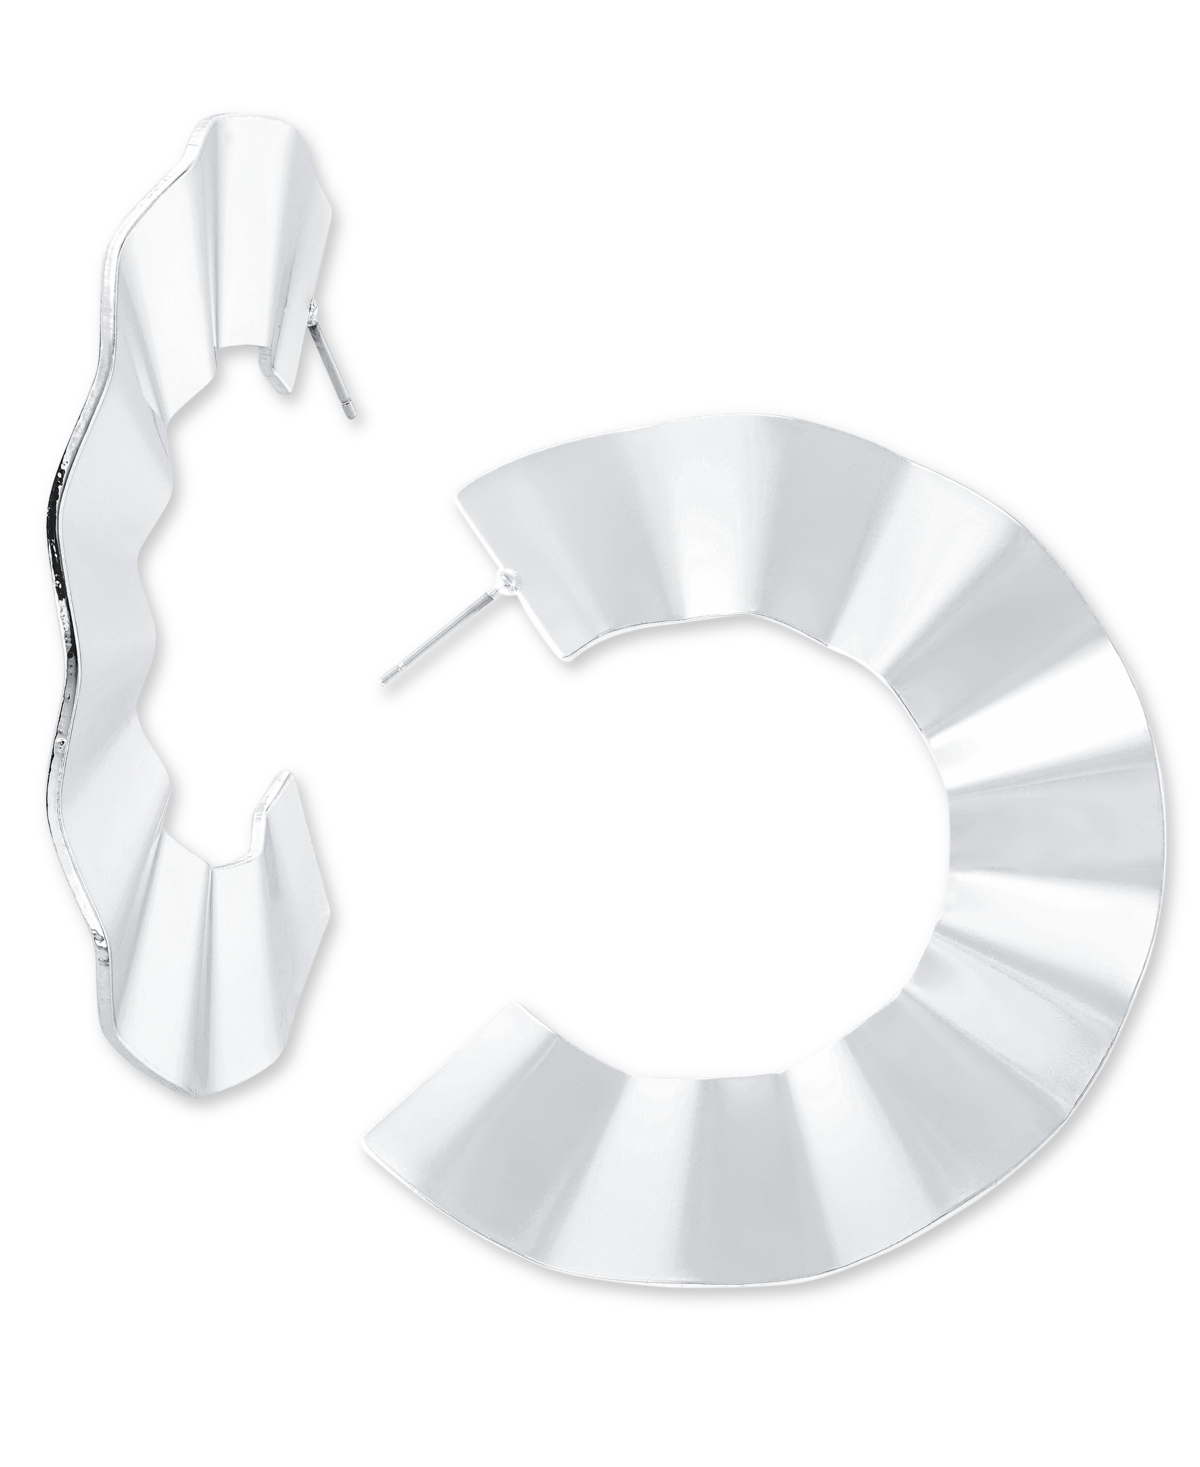 Large Wavy C-Hoop Earrings, 2.36", Created for Macy's - Silver